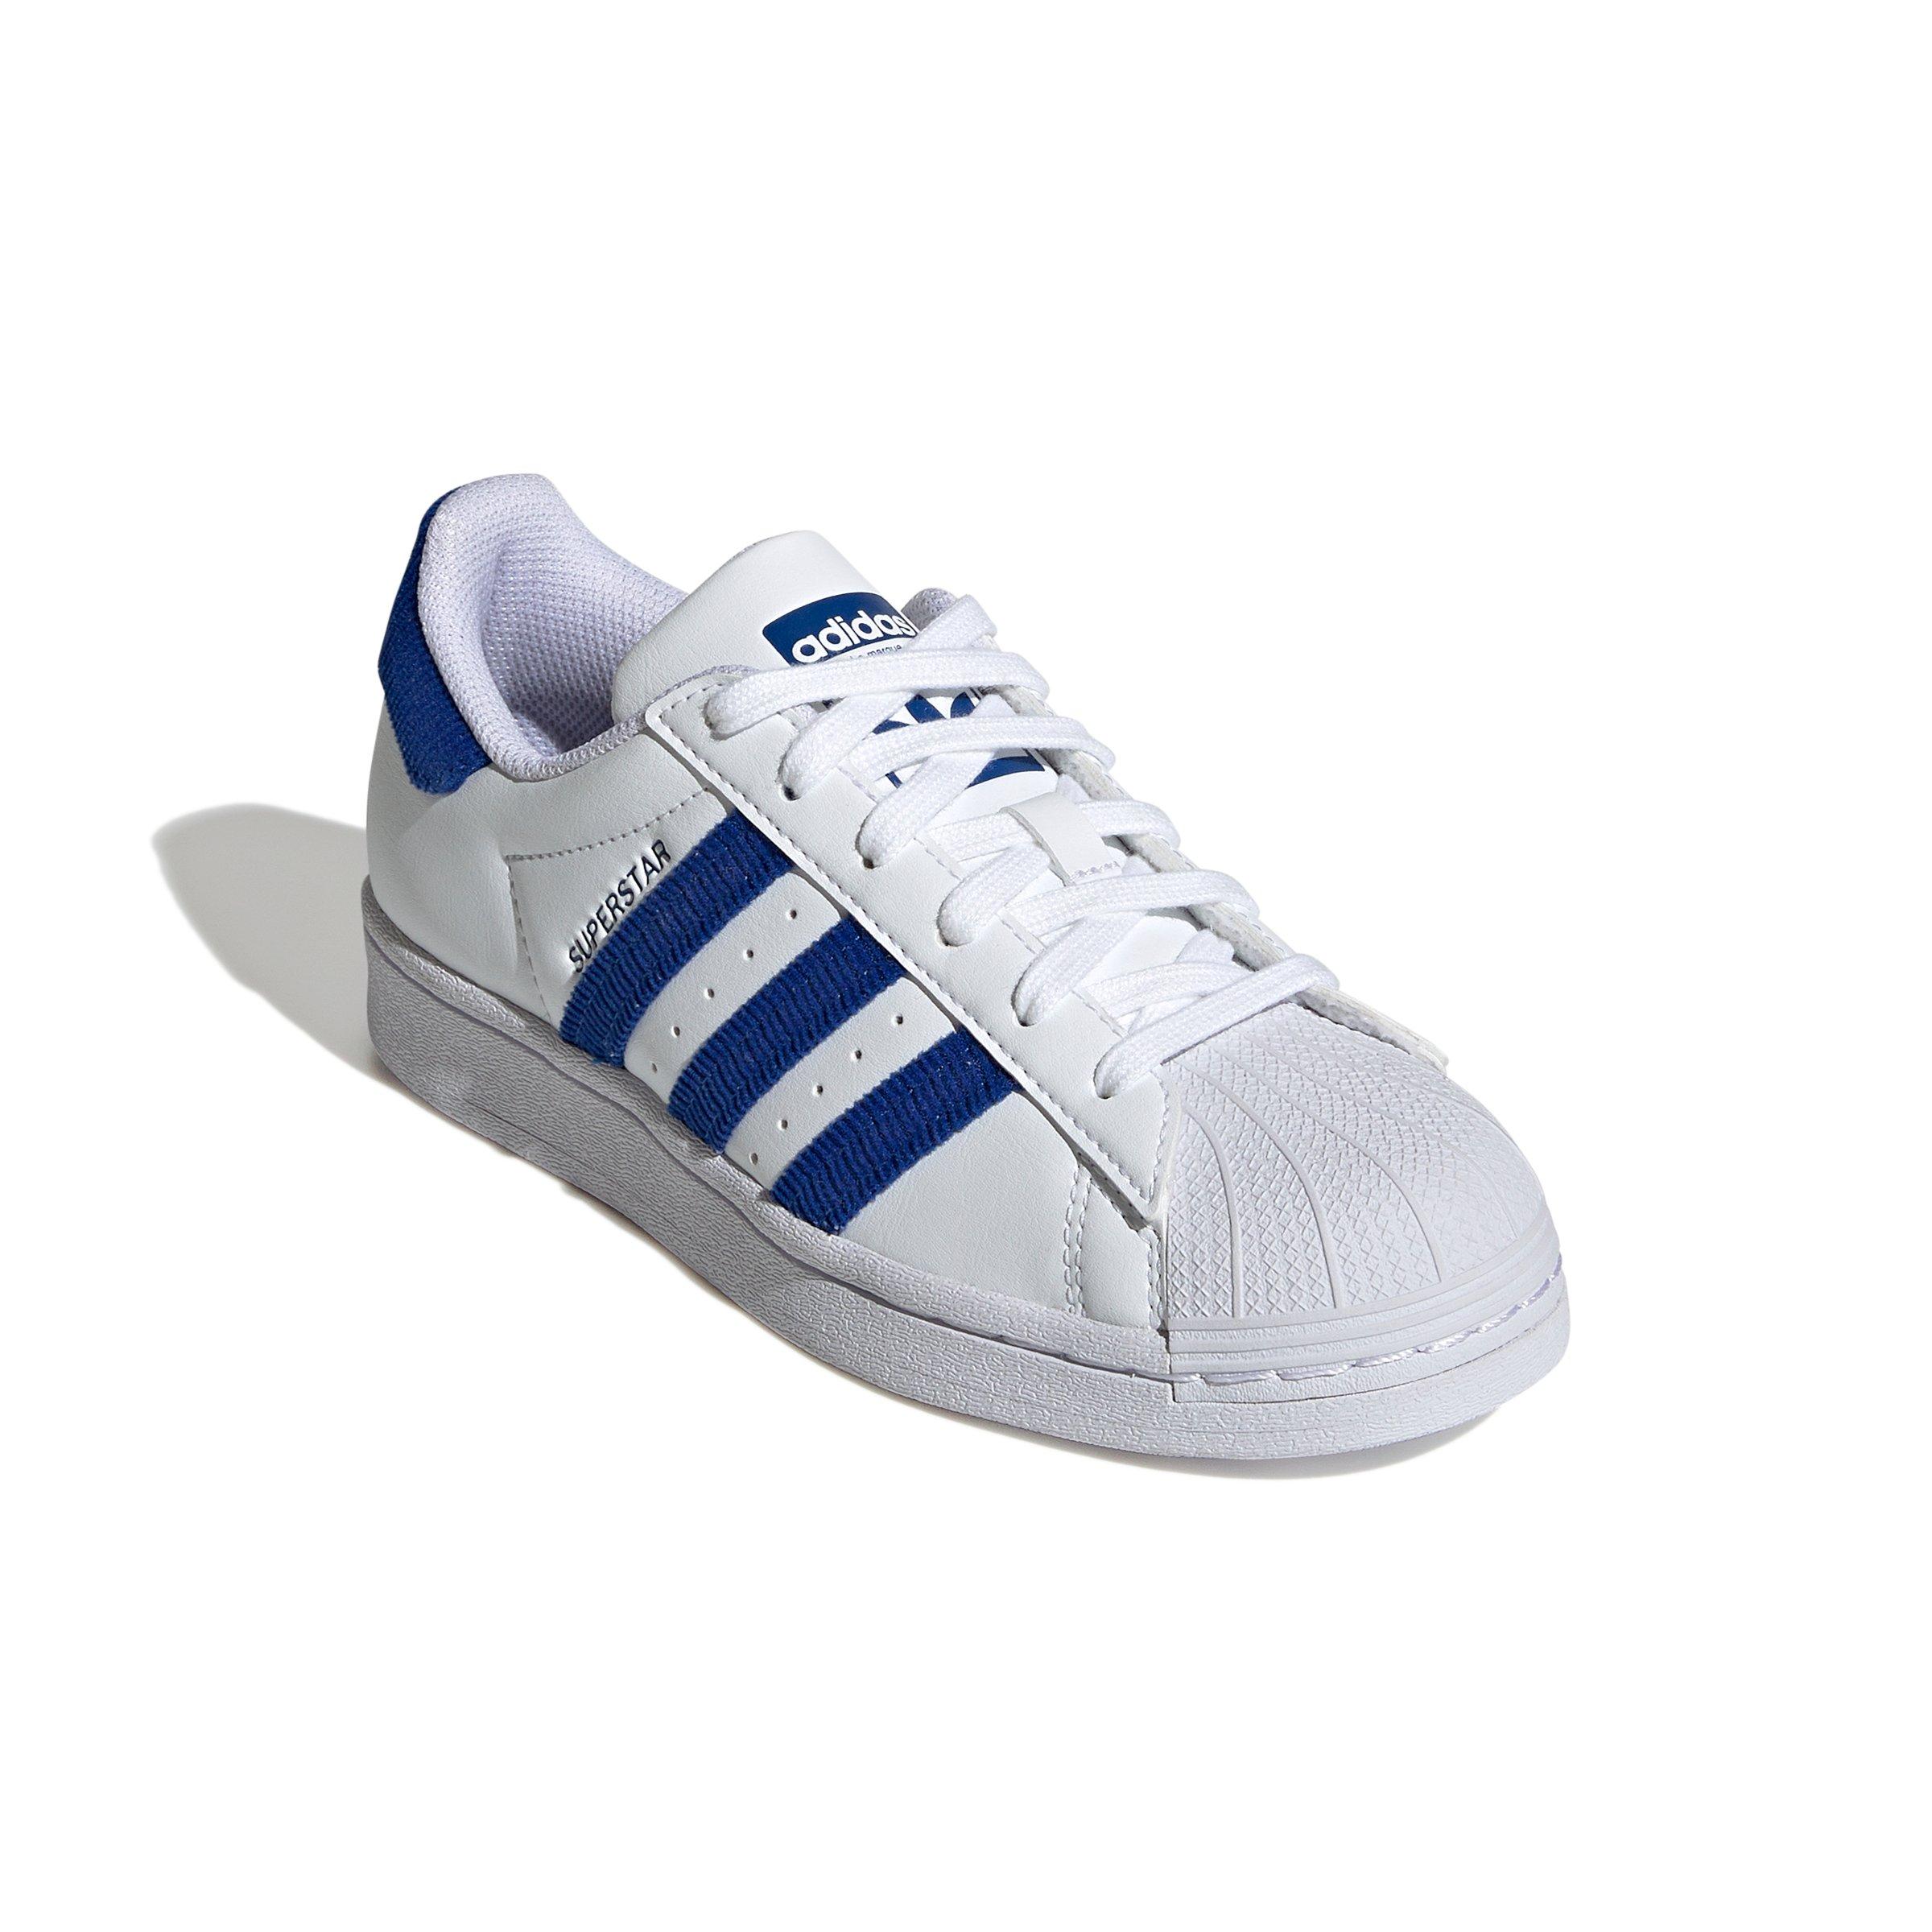 Adidas Superstar Kids Cloud White/Royal Blue - FW0768